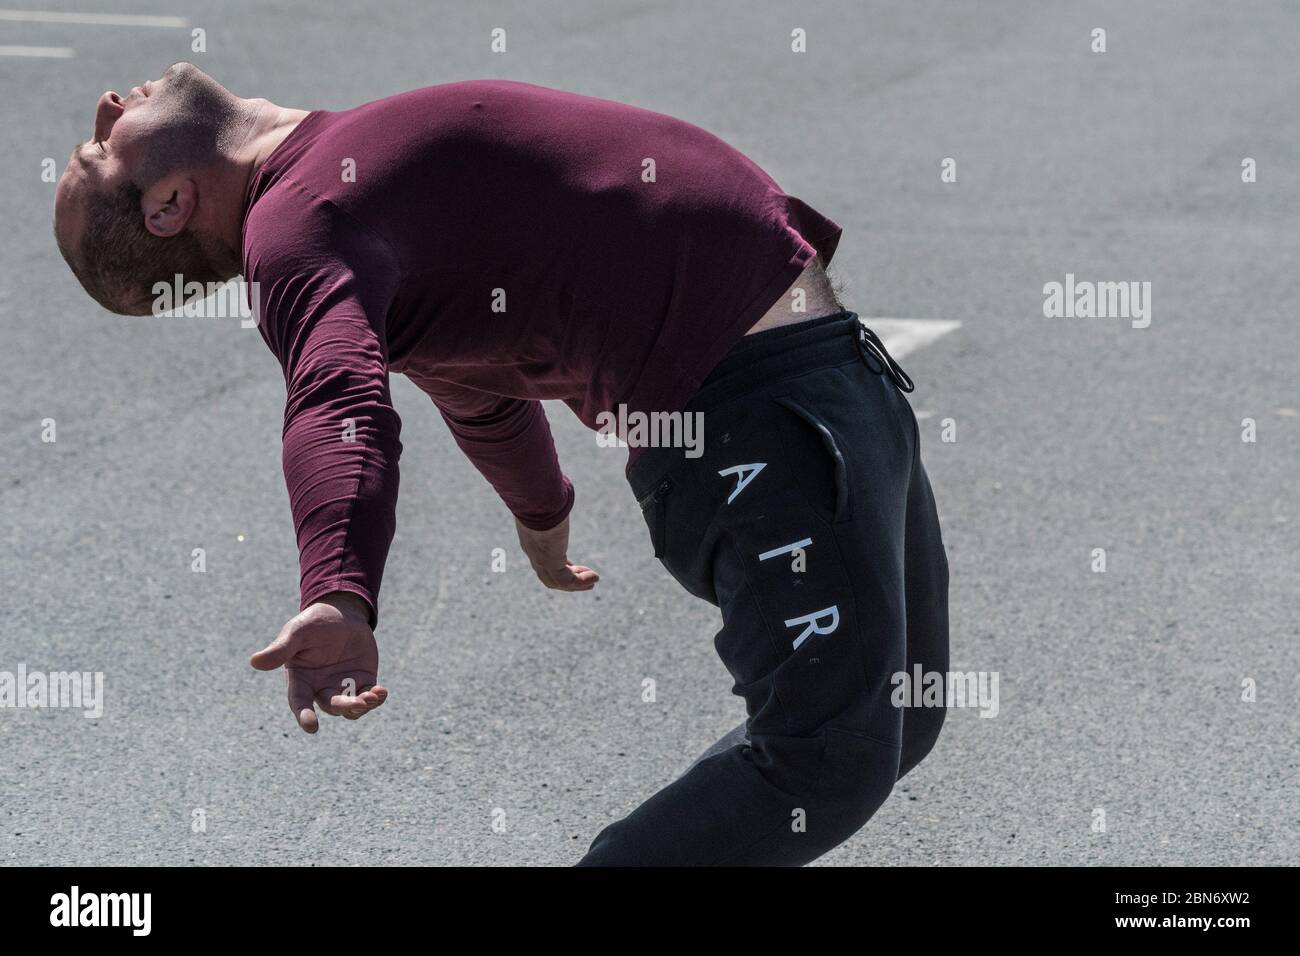 A man bending over backwards. Stock Photo